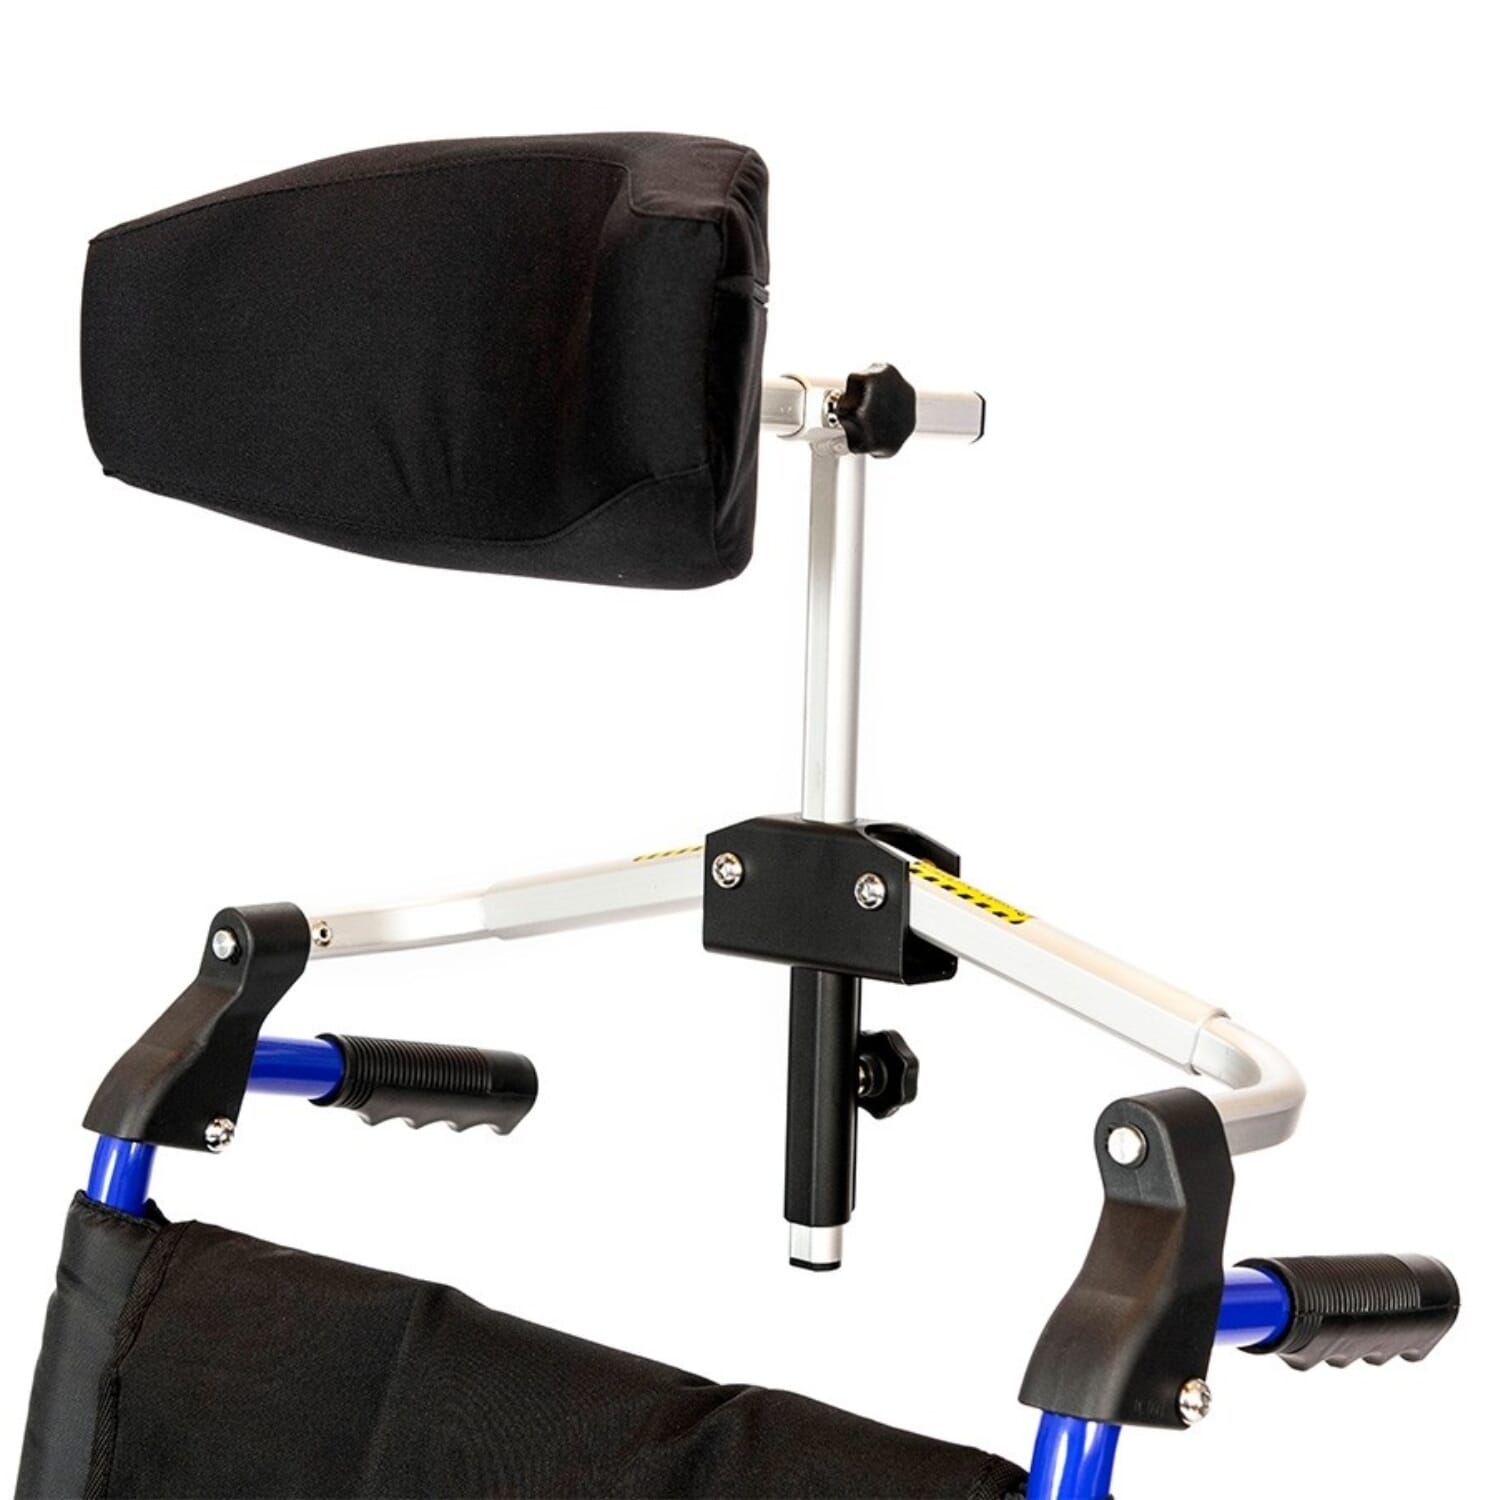 View Superhead Wheelchair Headrest Extra Large information